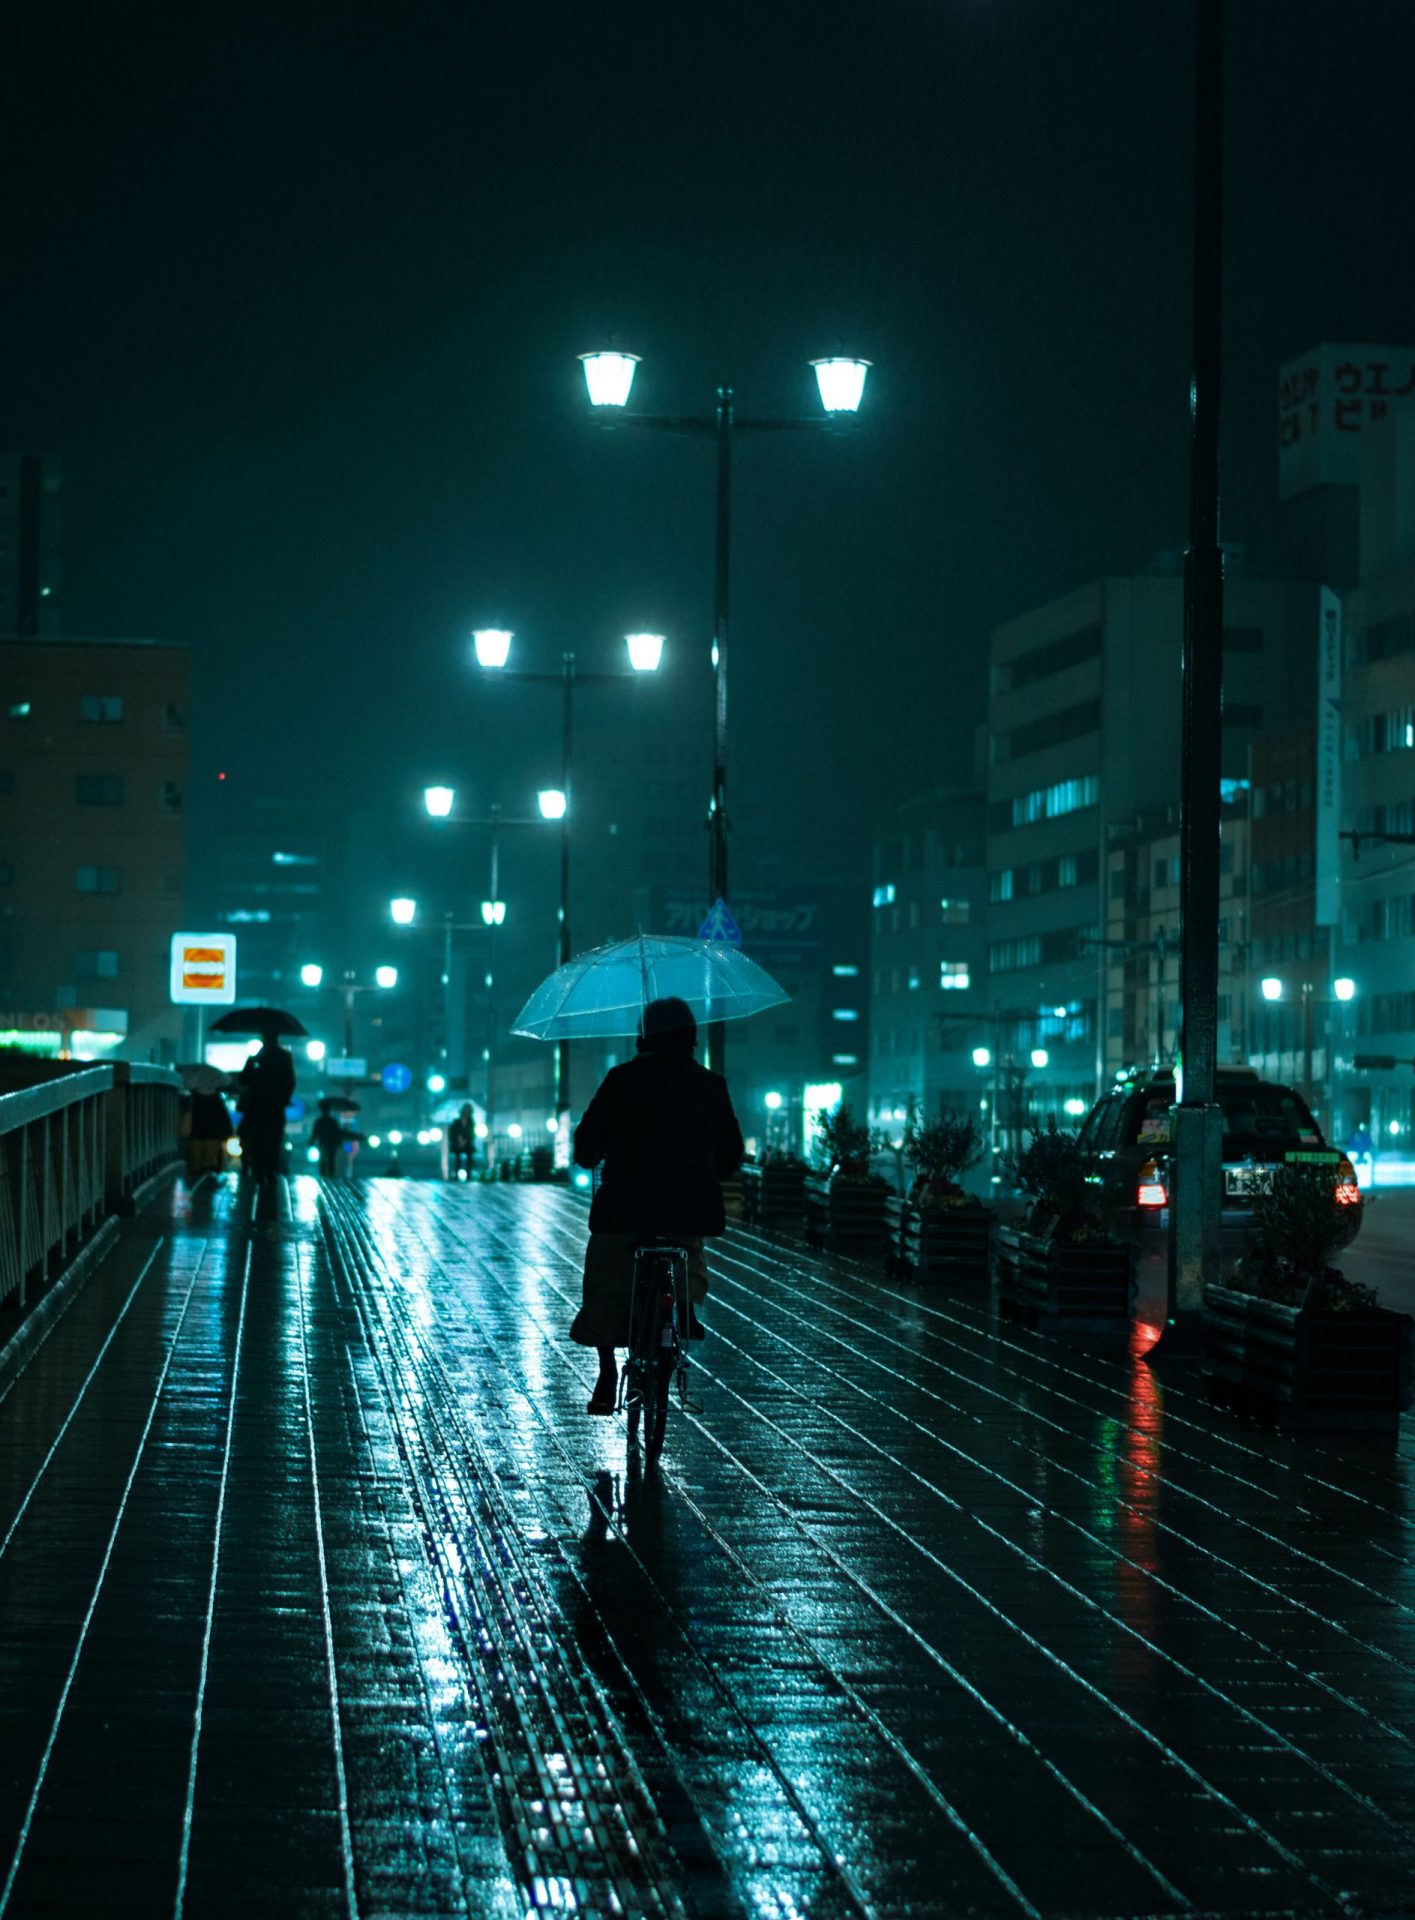 Biking in the rain at night